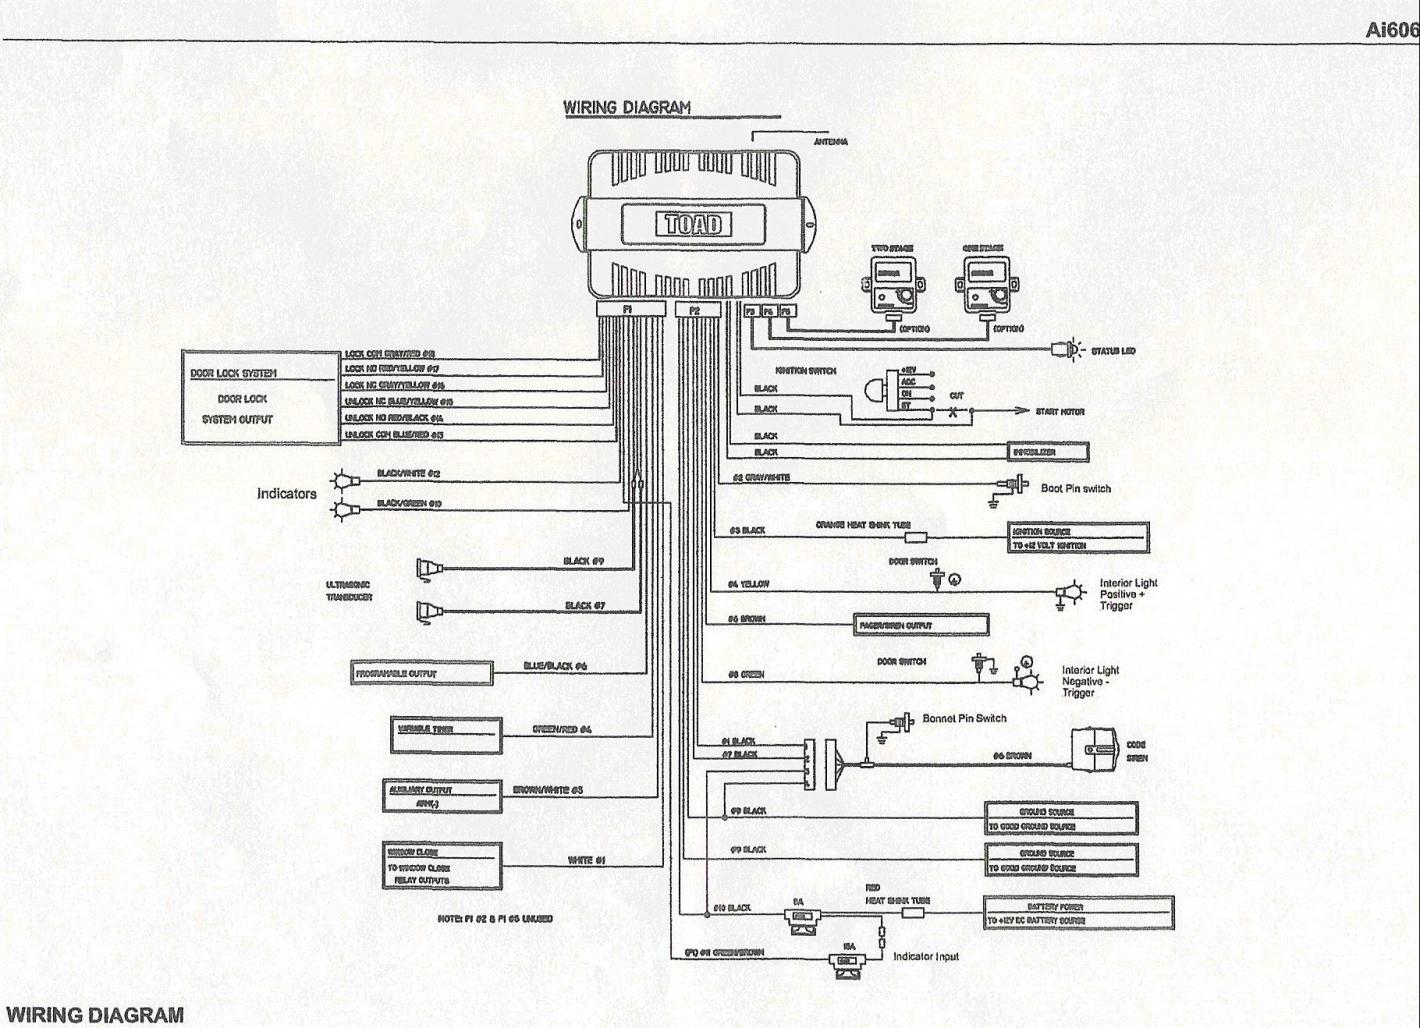 toad ai606 wiring diagram - Wiring Diagram